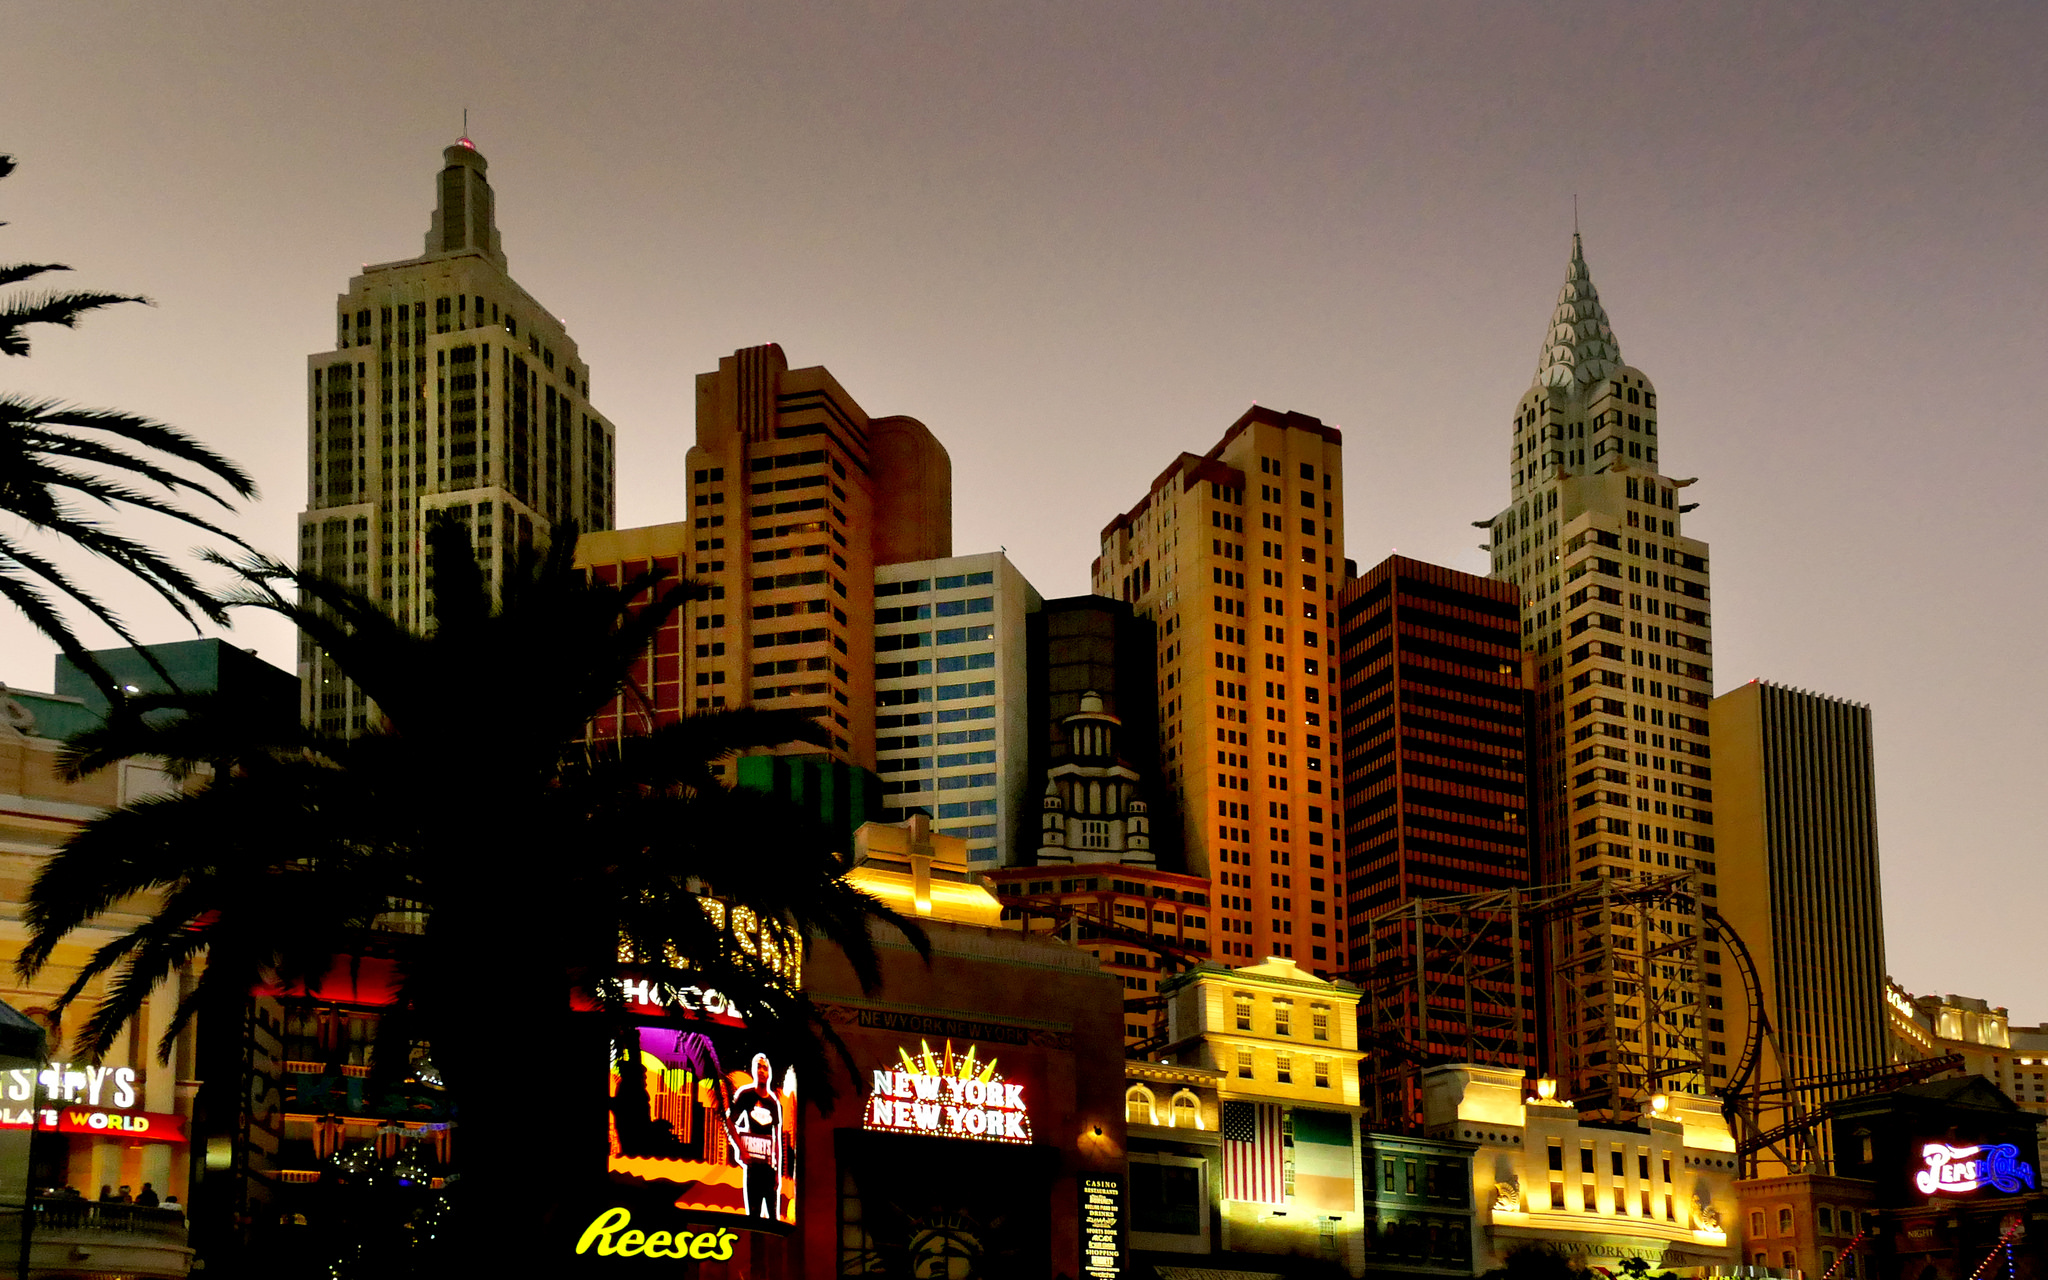 New York-New York Hotel and Casino by Bernard Spragg via Flickr